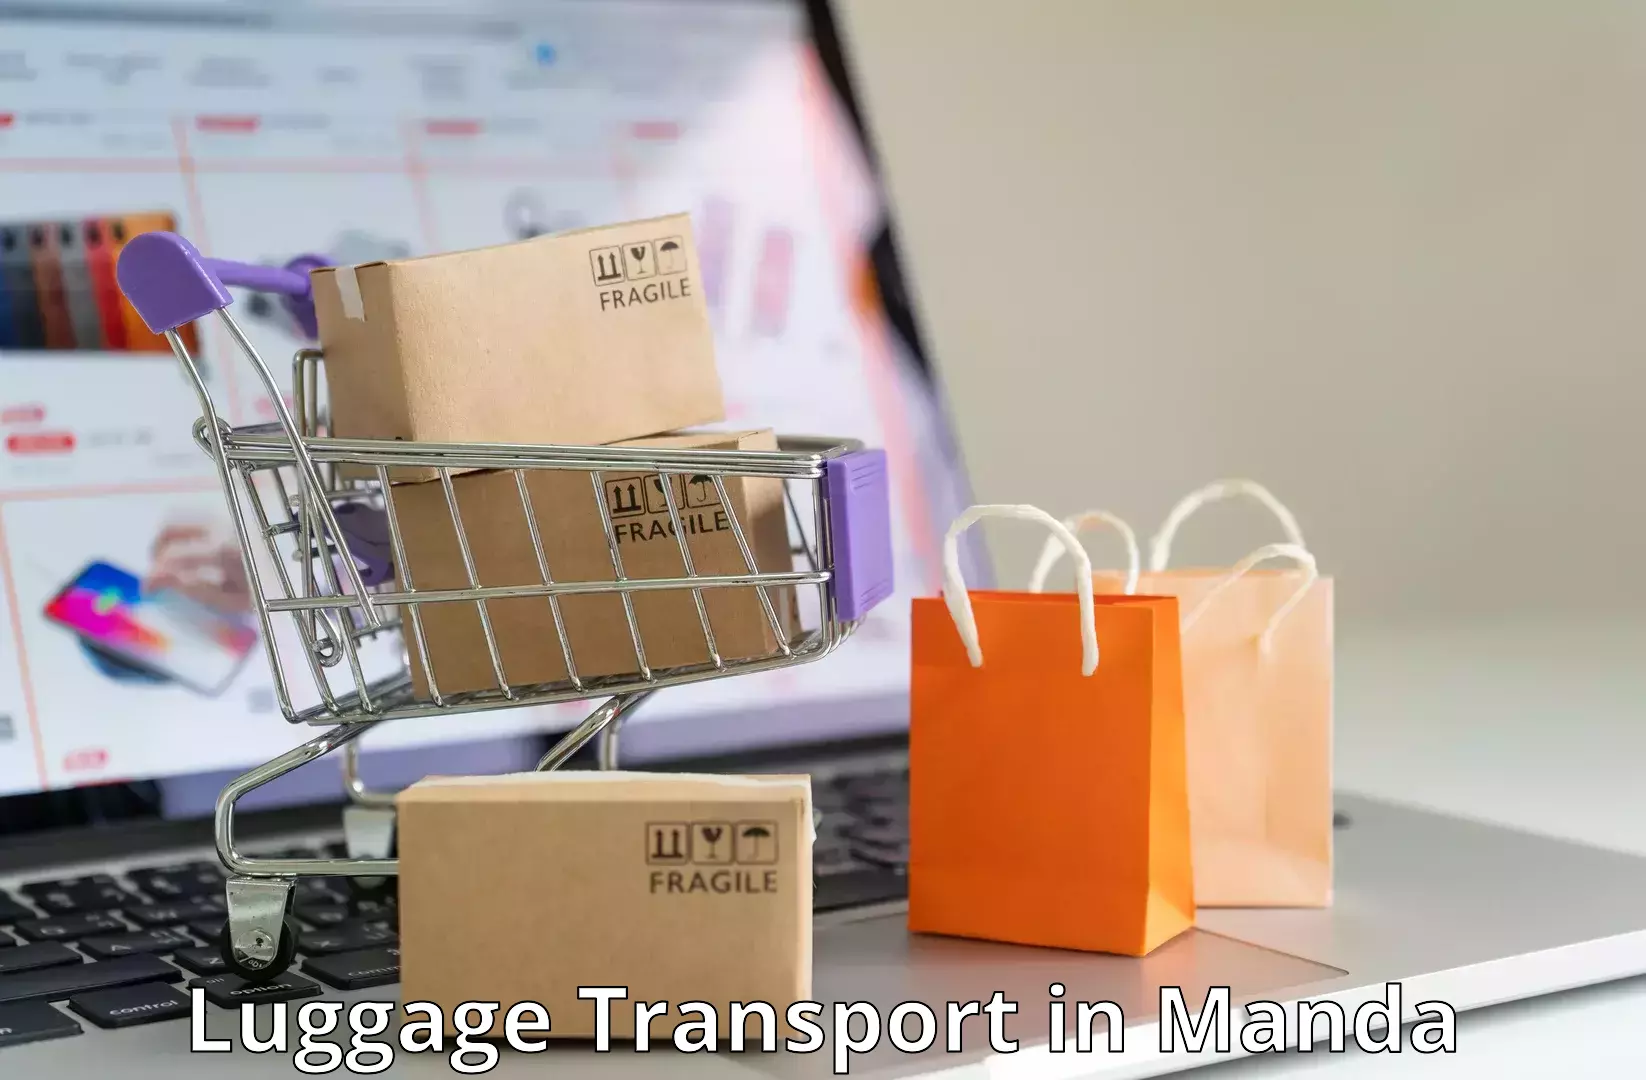 Luggage delivery optimization in Manda